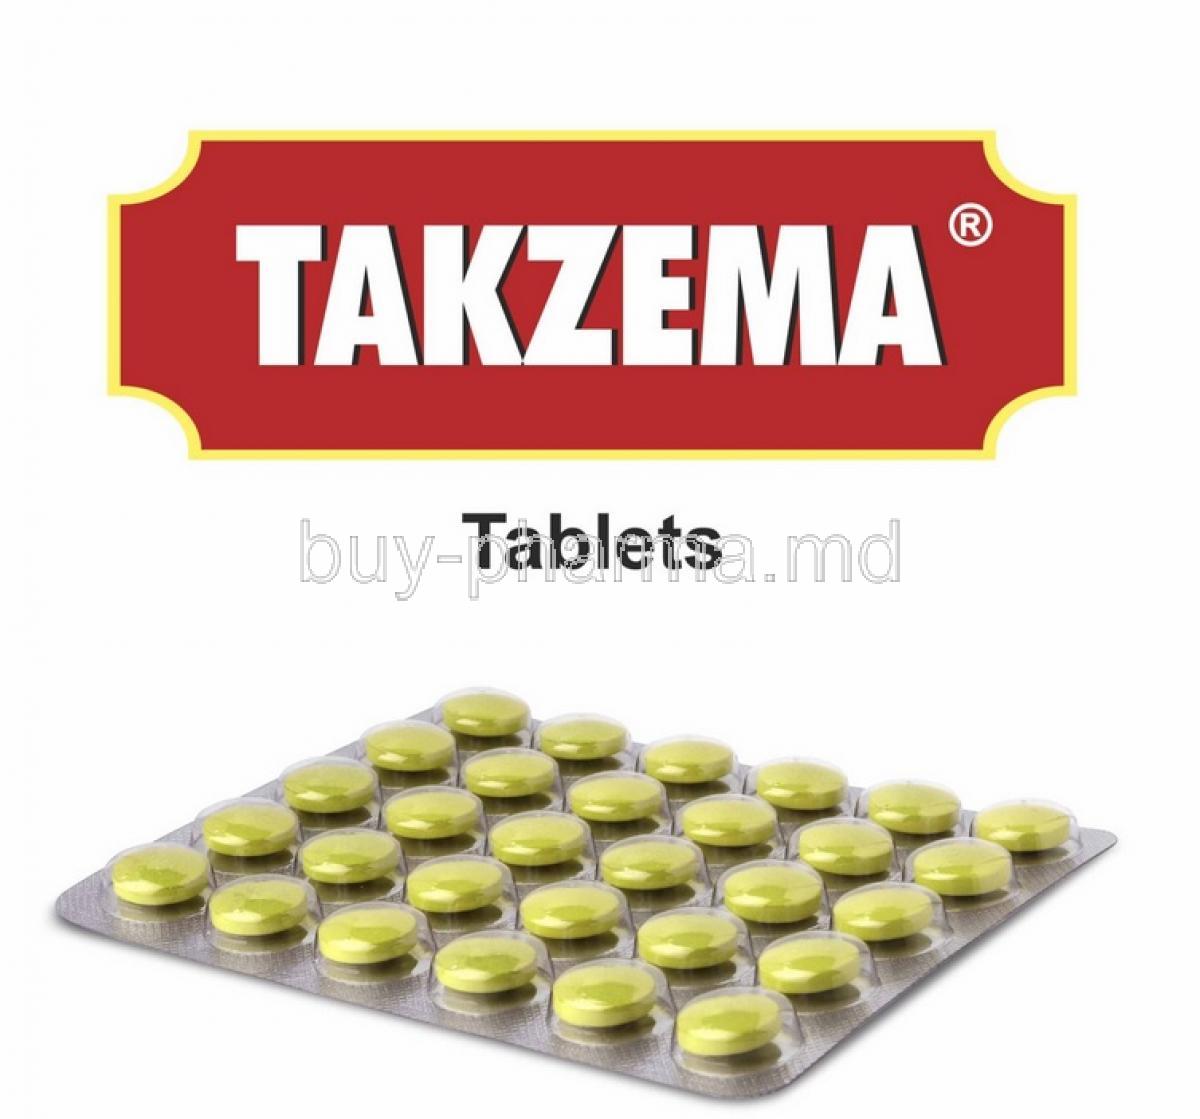 Tekzema box and tablets